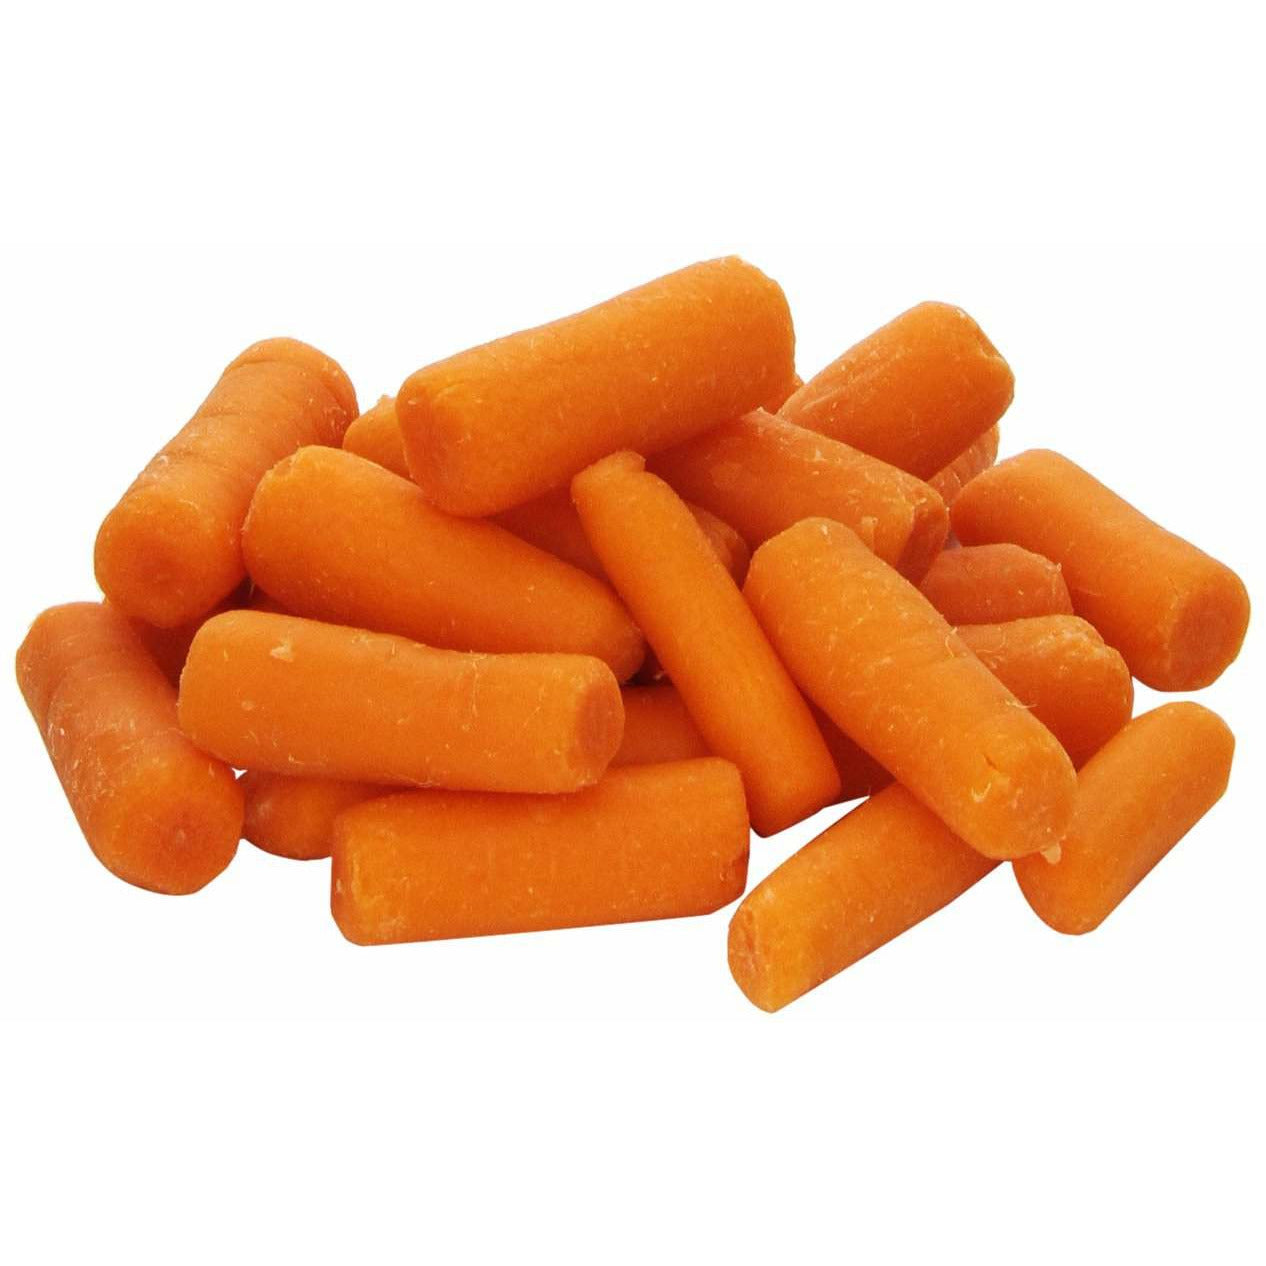 Organic Baby Carrots, 2 lb